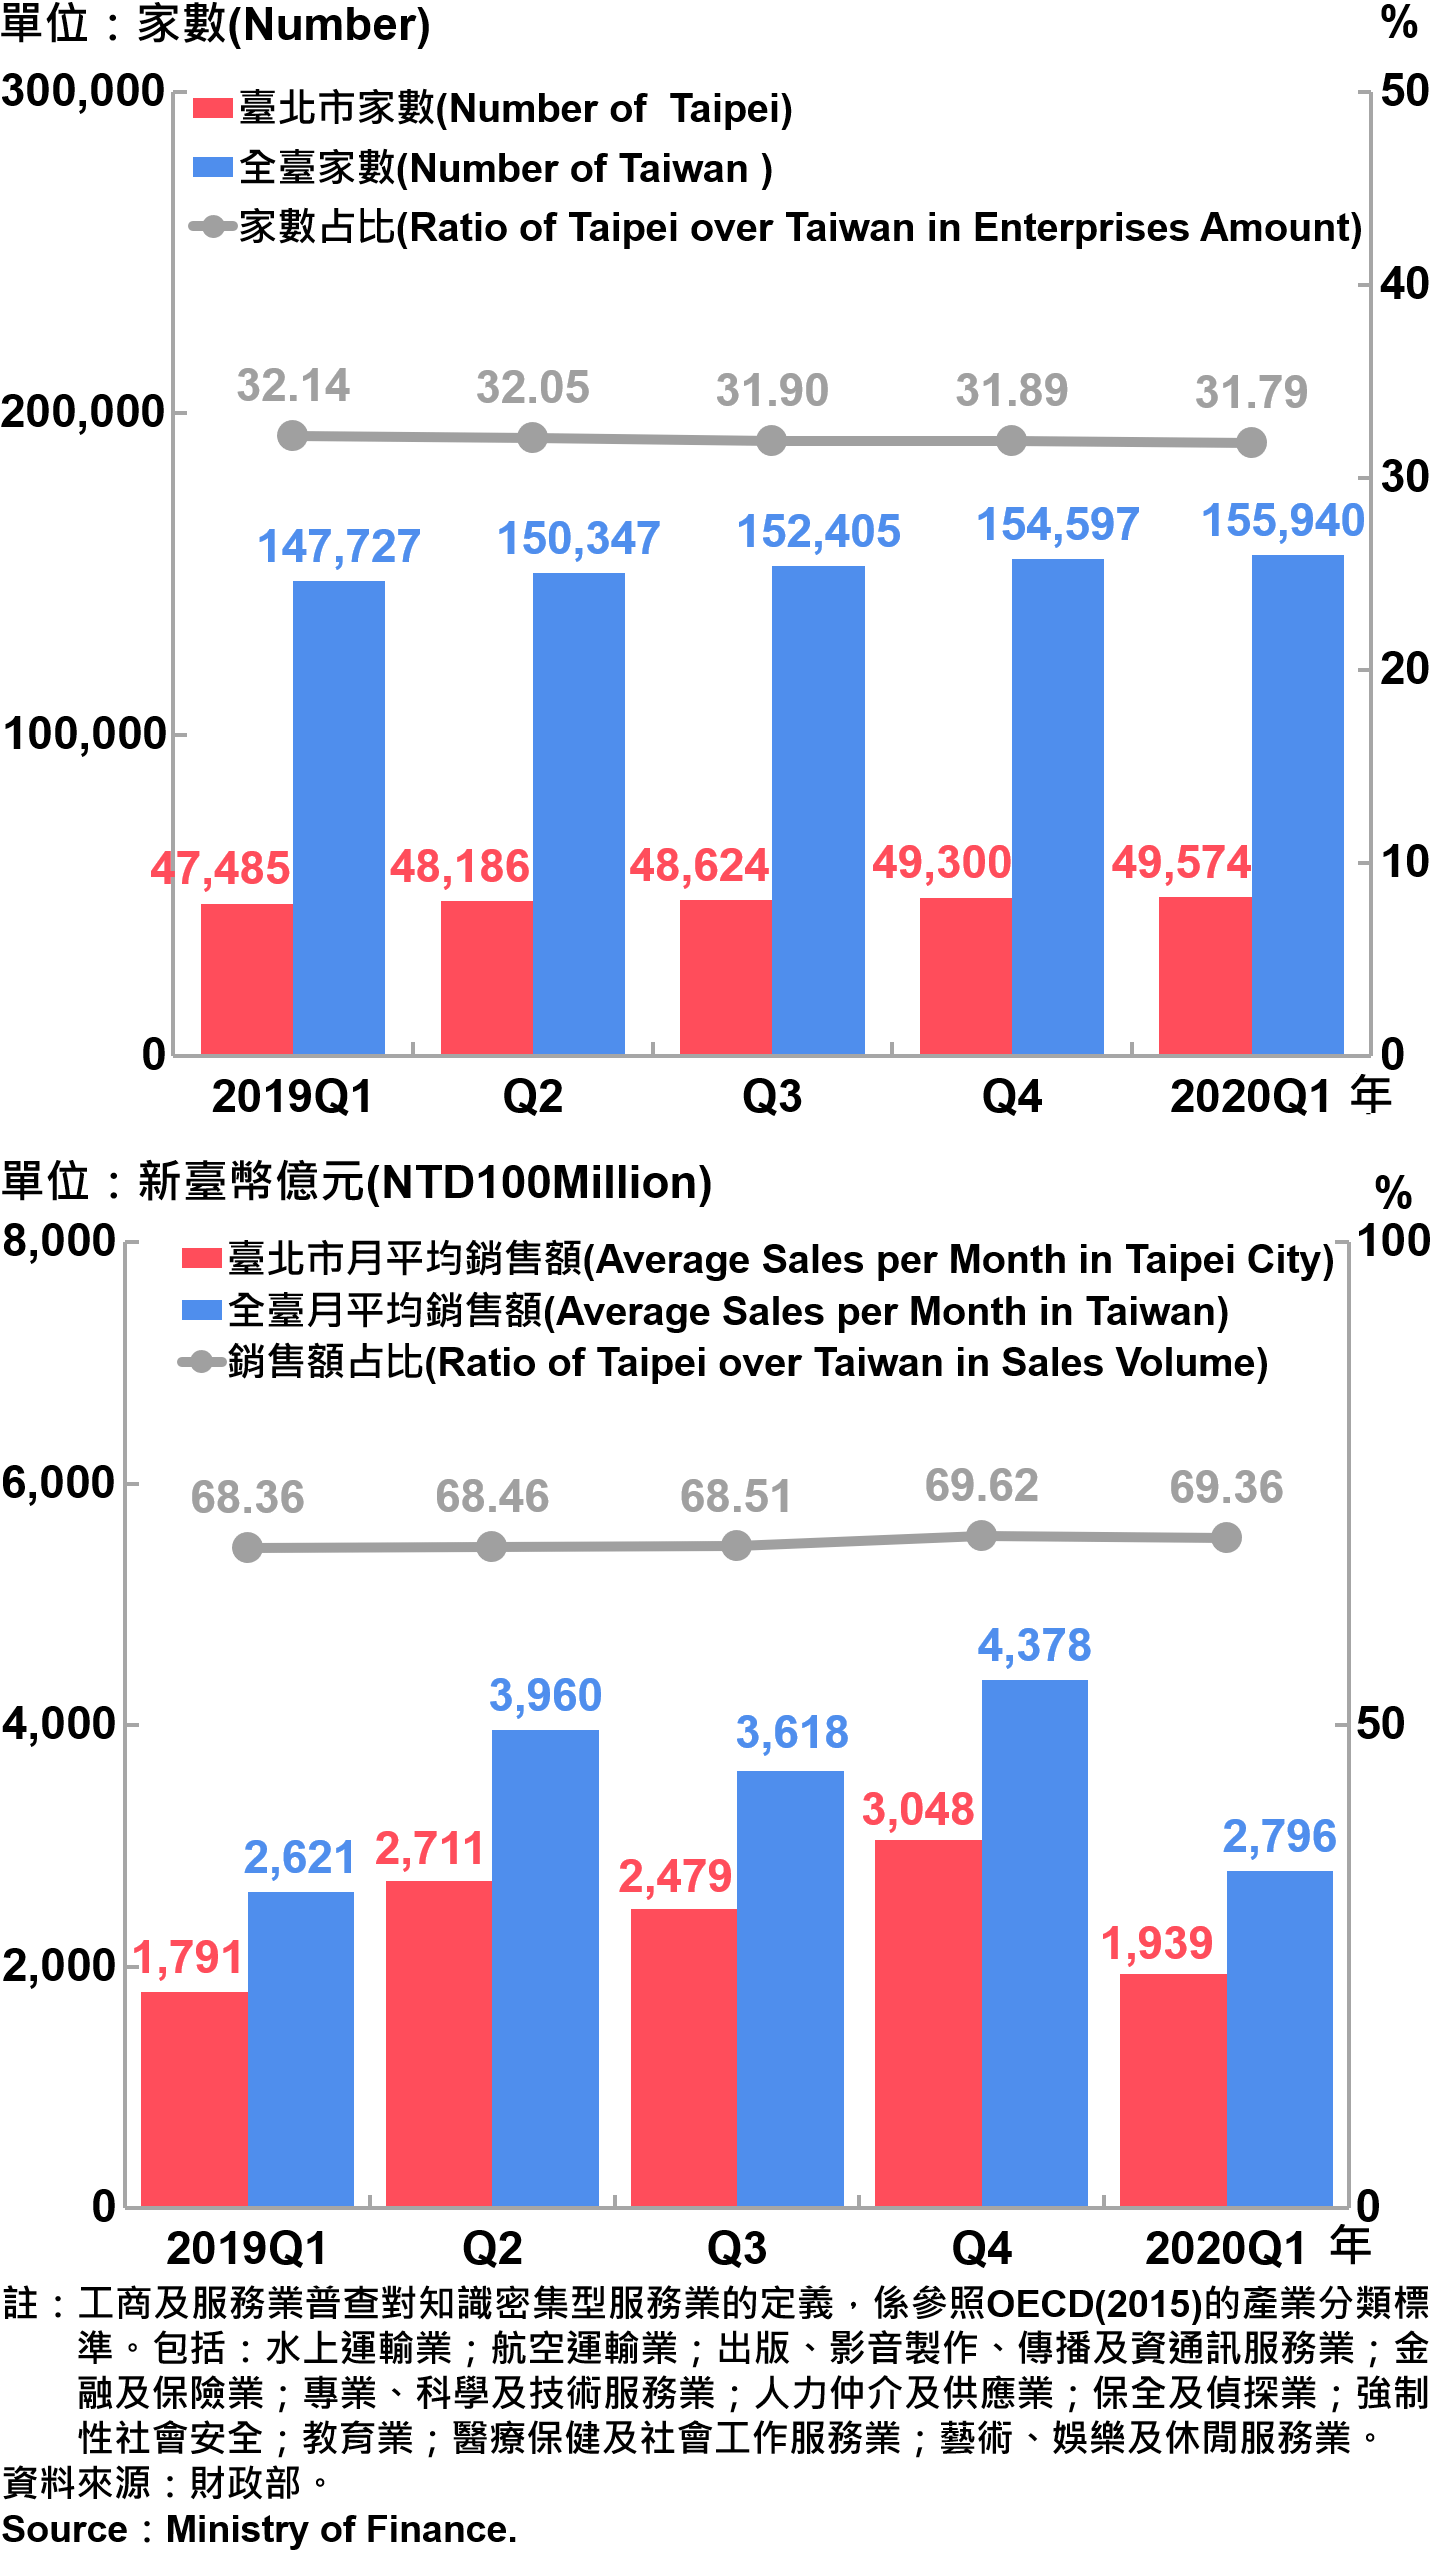 臺北市知識密集型服務業之家數及銷售額—2020Q1 Statistics Knowledge Intensive Service Industry in Taipei City—2020Q1